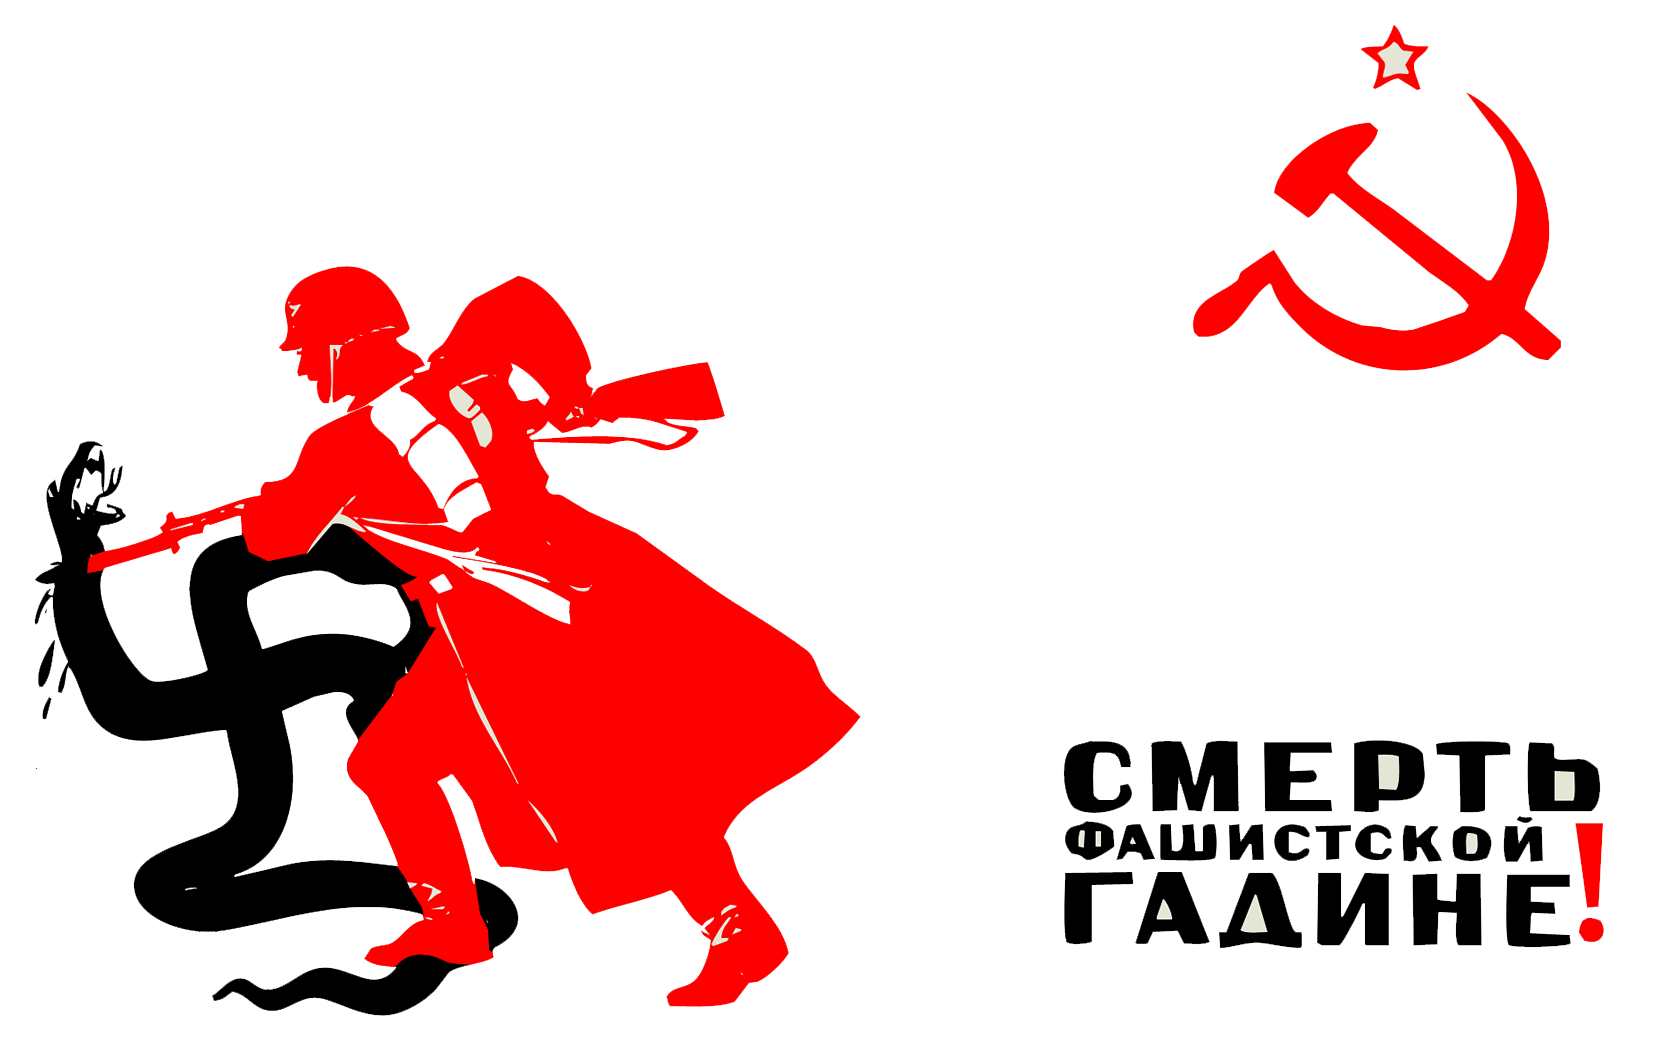 Socialism USSR History Communism Soviet Union Soviet Army Propaganda 1680x1050